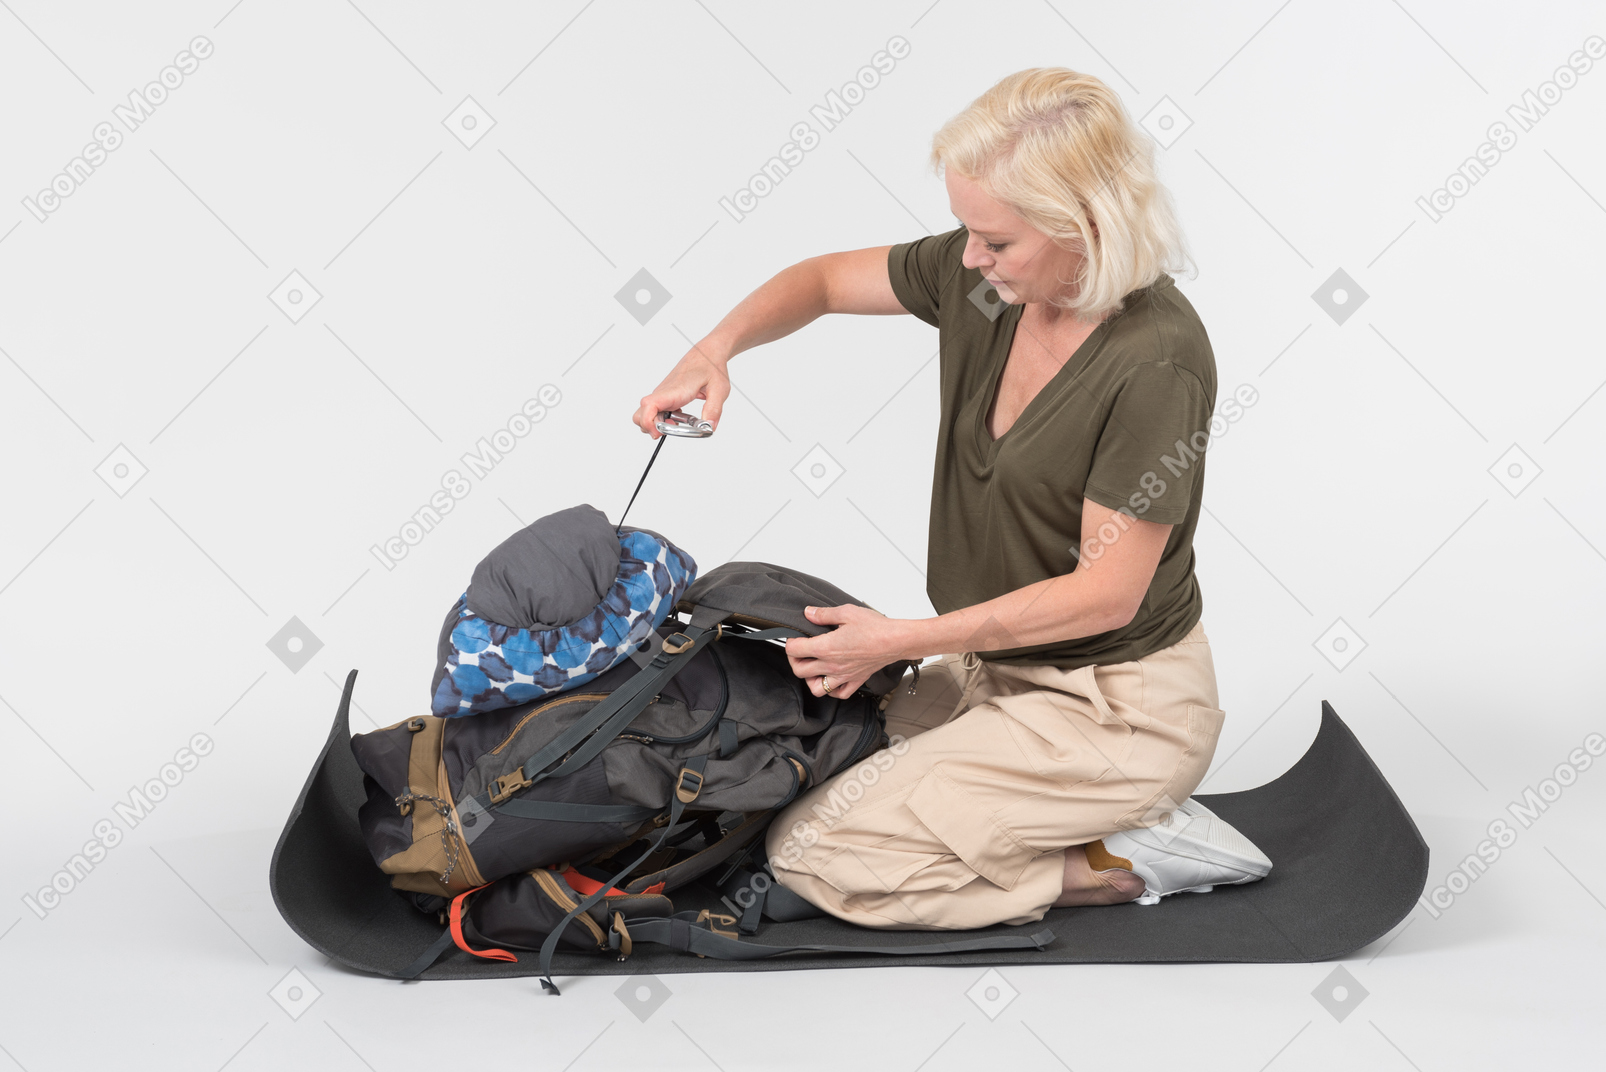 Mature female tourist organising tourist backpack